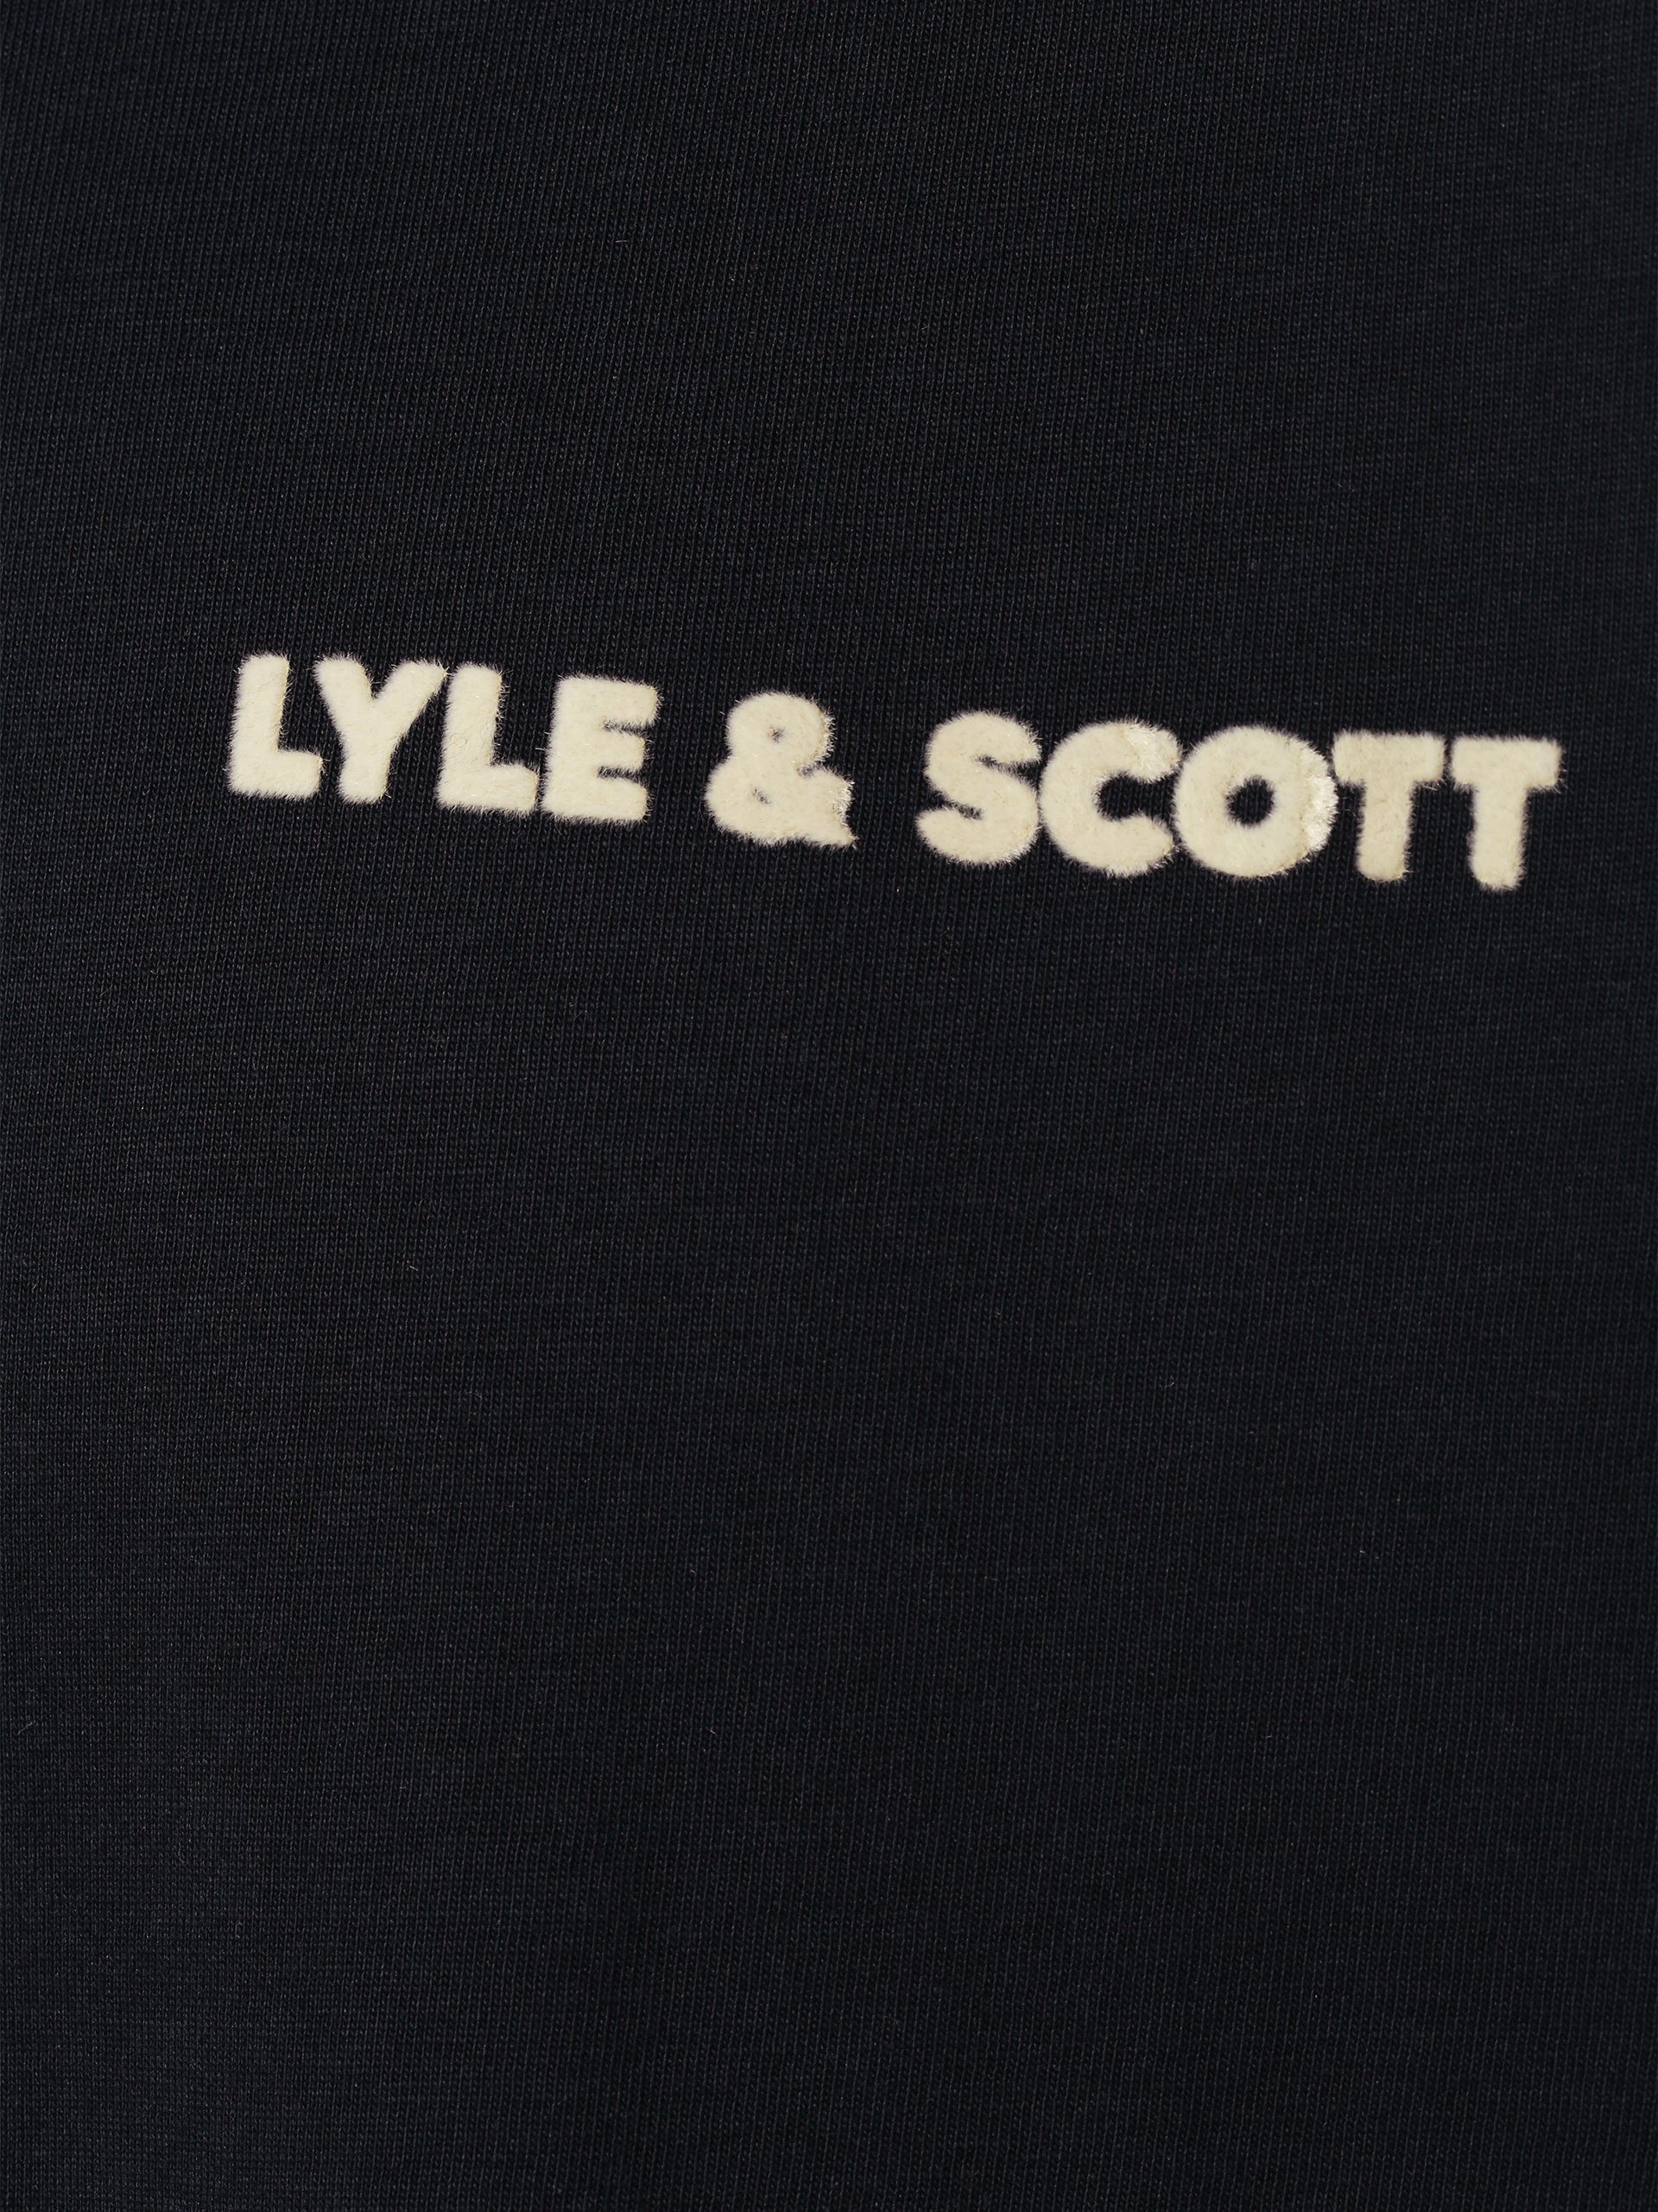 Lyle & Scott T-Shirt marine